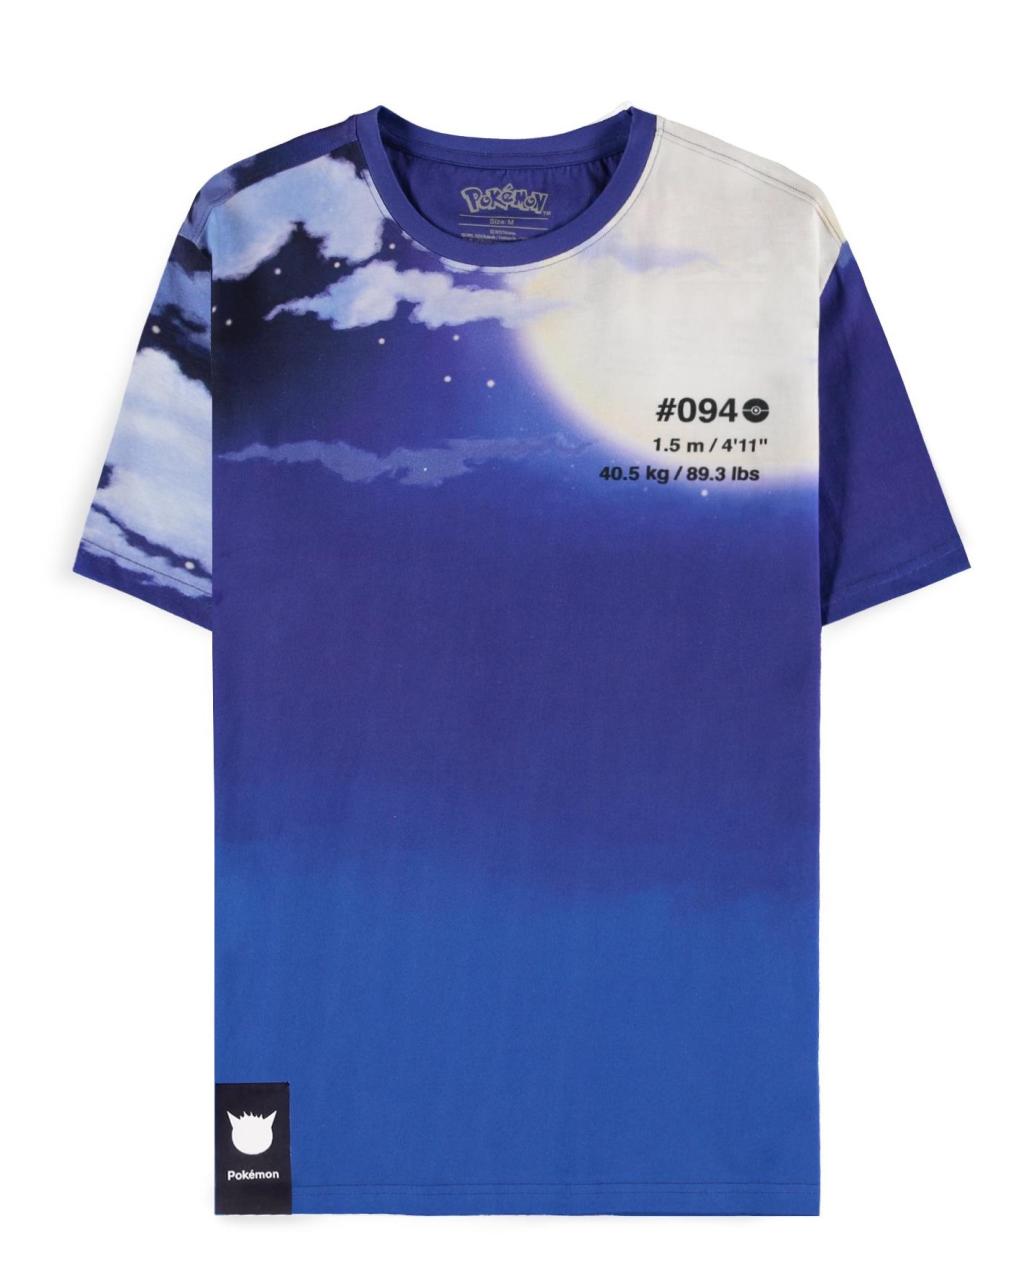 POKEMON - Gengar - Men's T-shirt (XS)